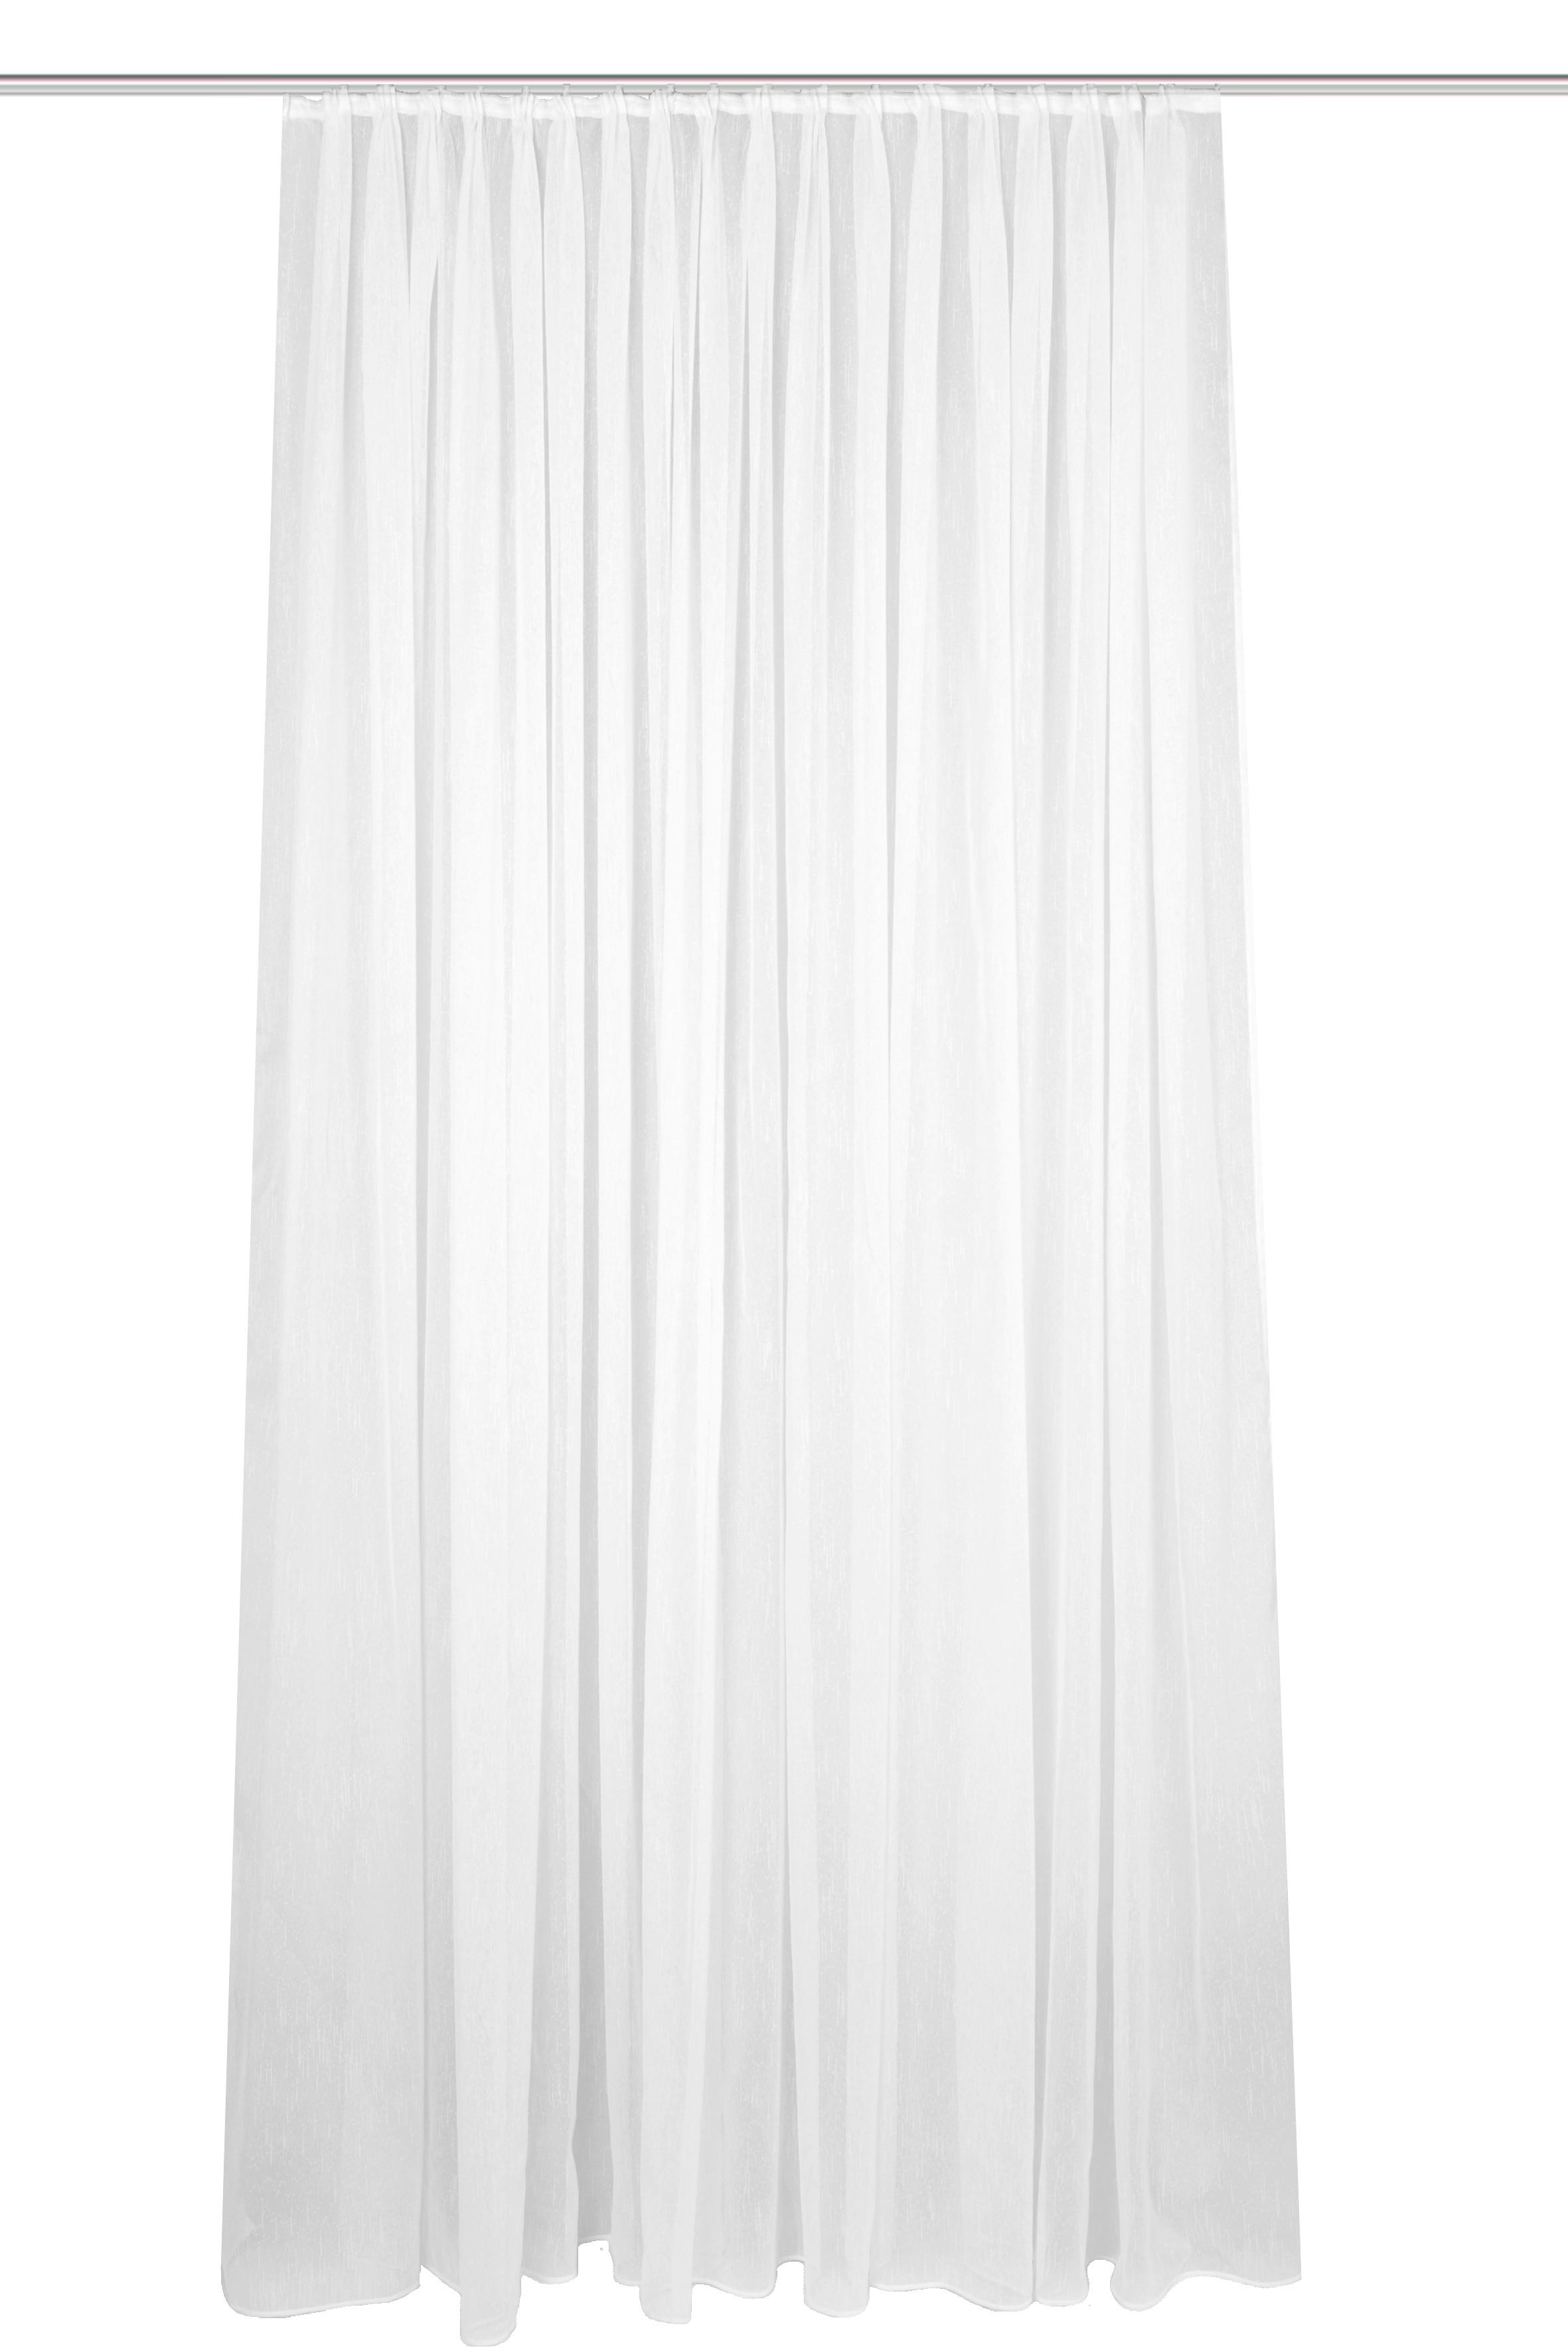 FERTIGSTORE  transparent  300/225 cm   - Weiß, Basics, Textil (300/225cm) - Schmidt W. Gmbh